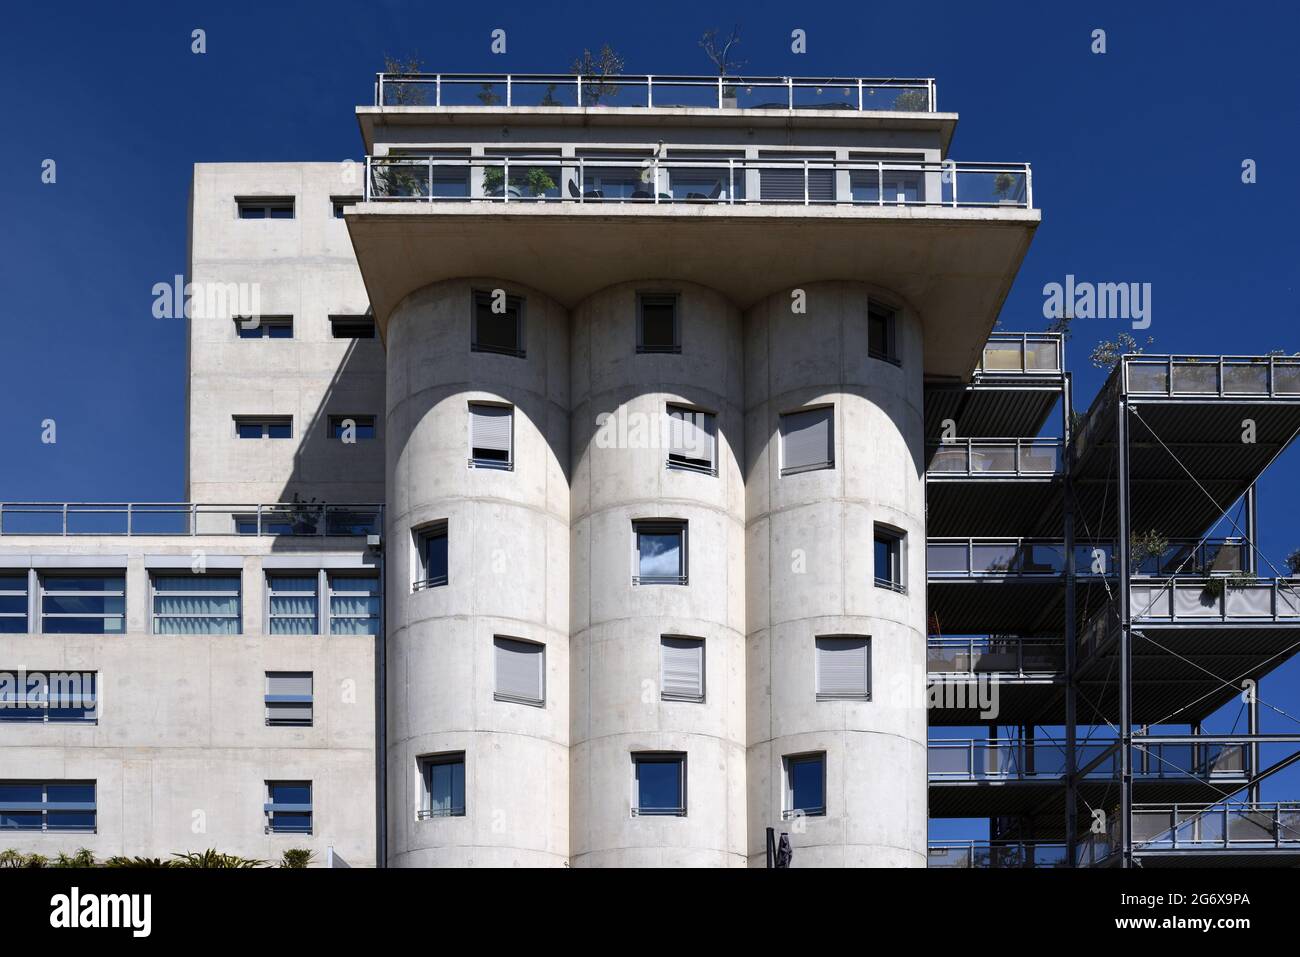 Converted Silo or Building Conversion of Concrete Industrial Silo into Upmarket Apartments Aix-en-Provence France Stock Photo